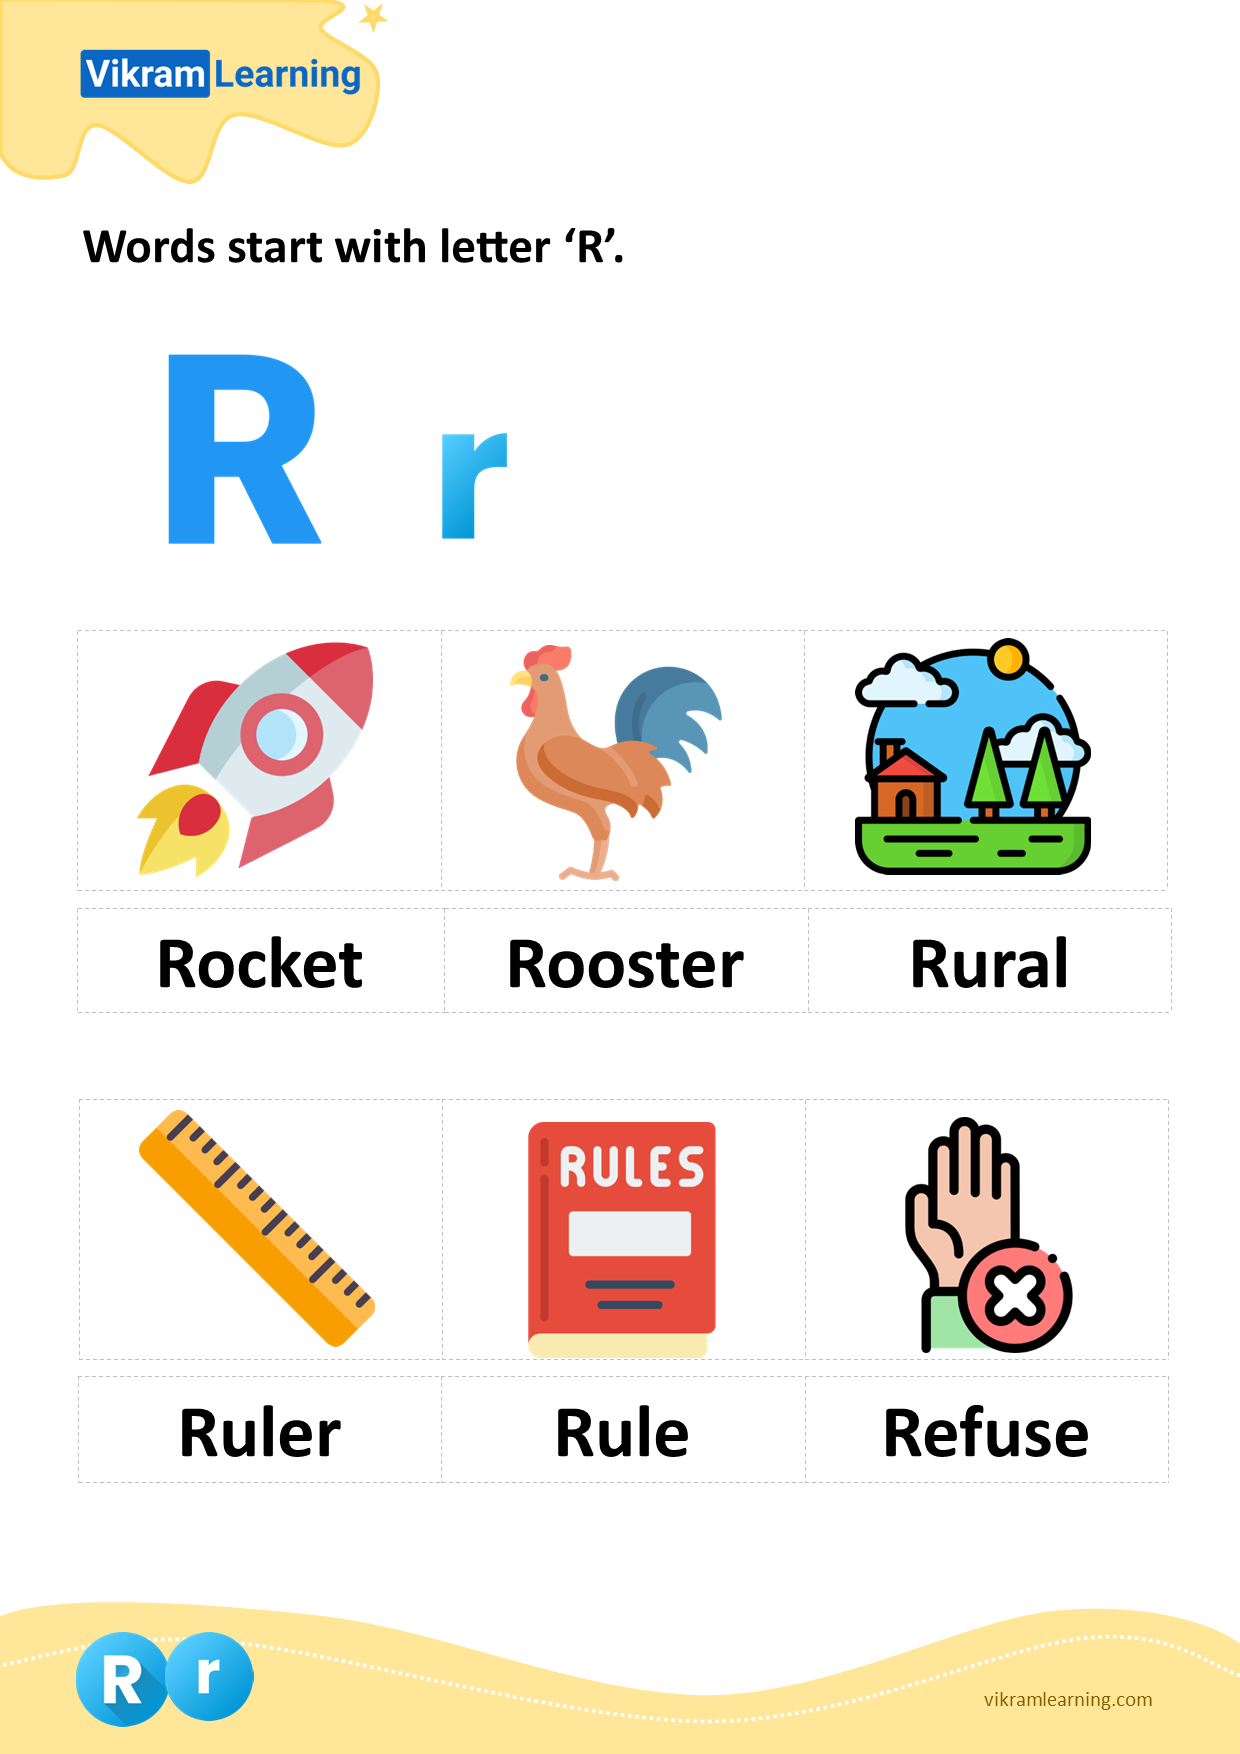 Download words start with letter 'r' worksheets